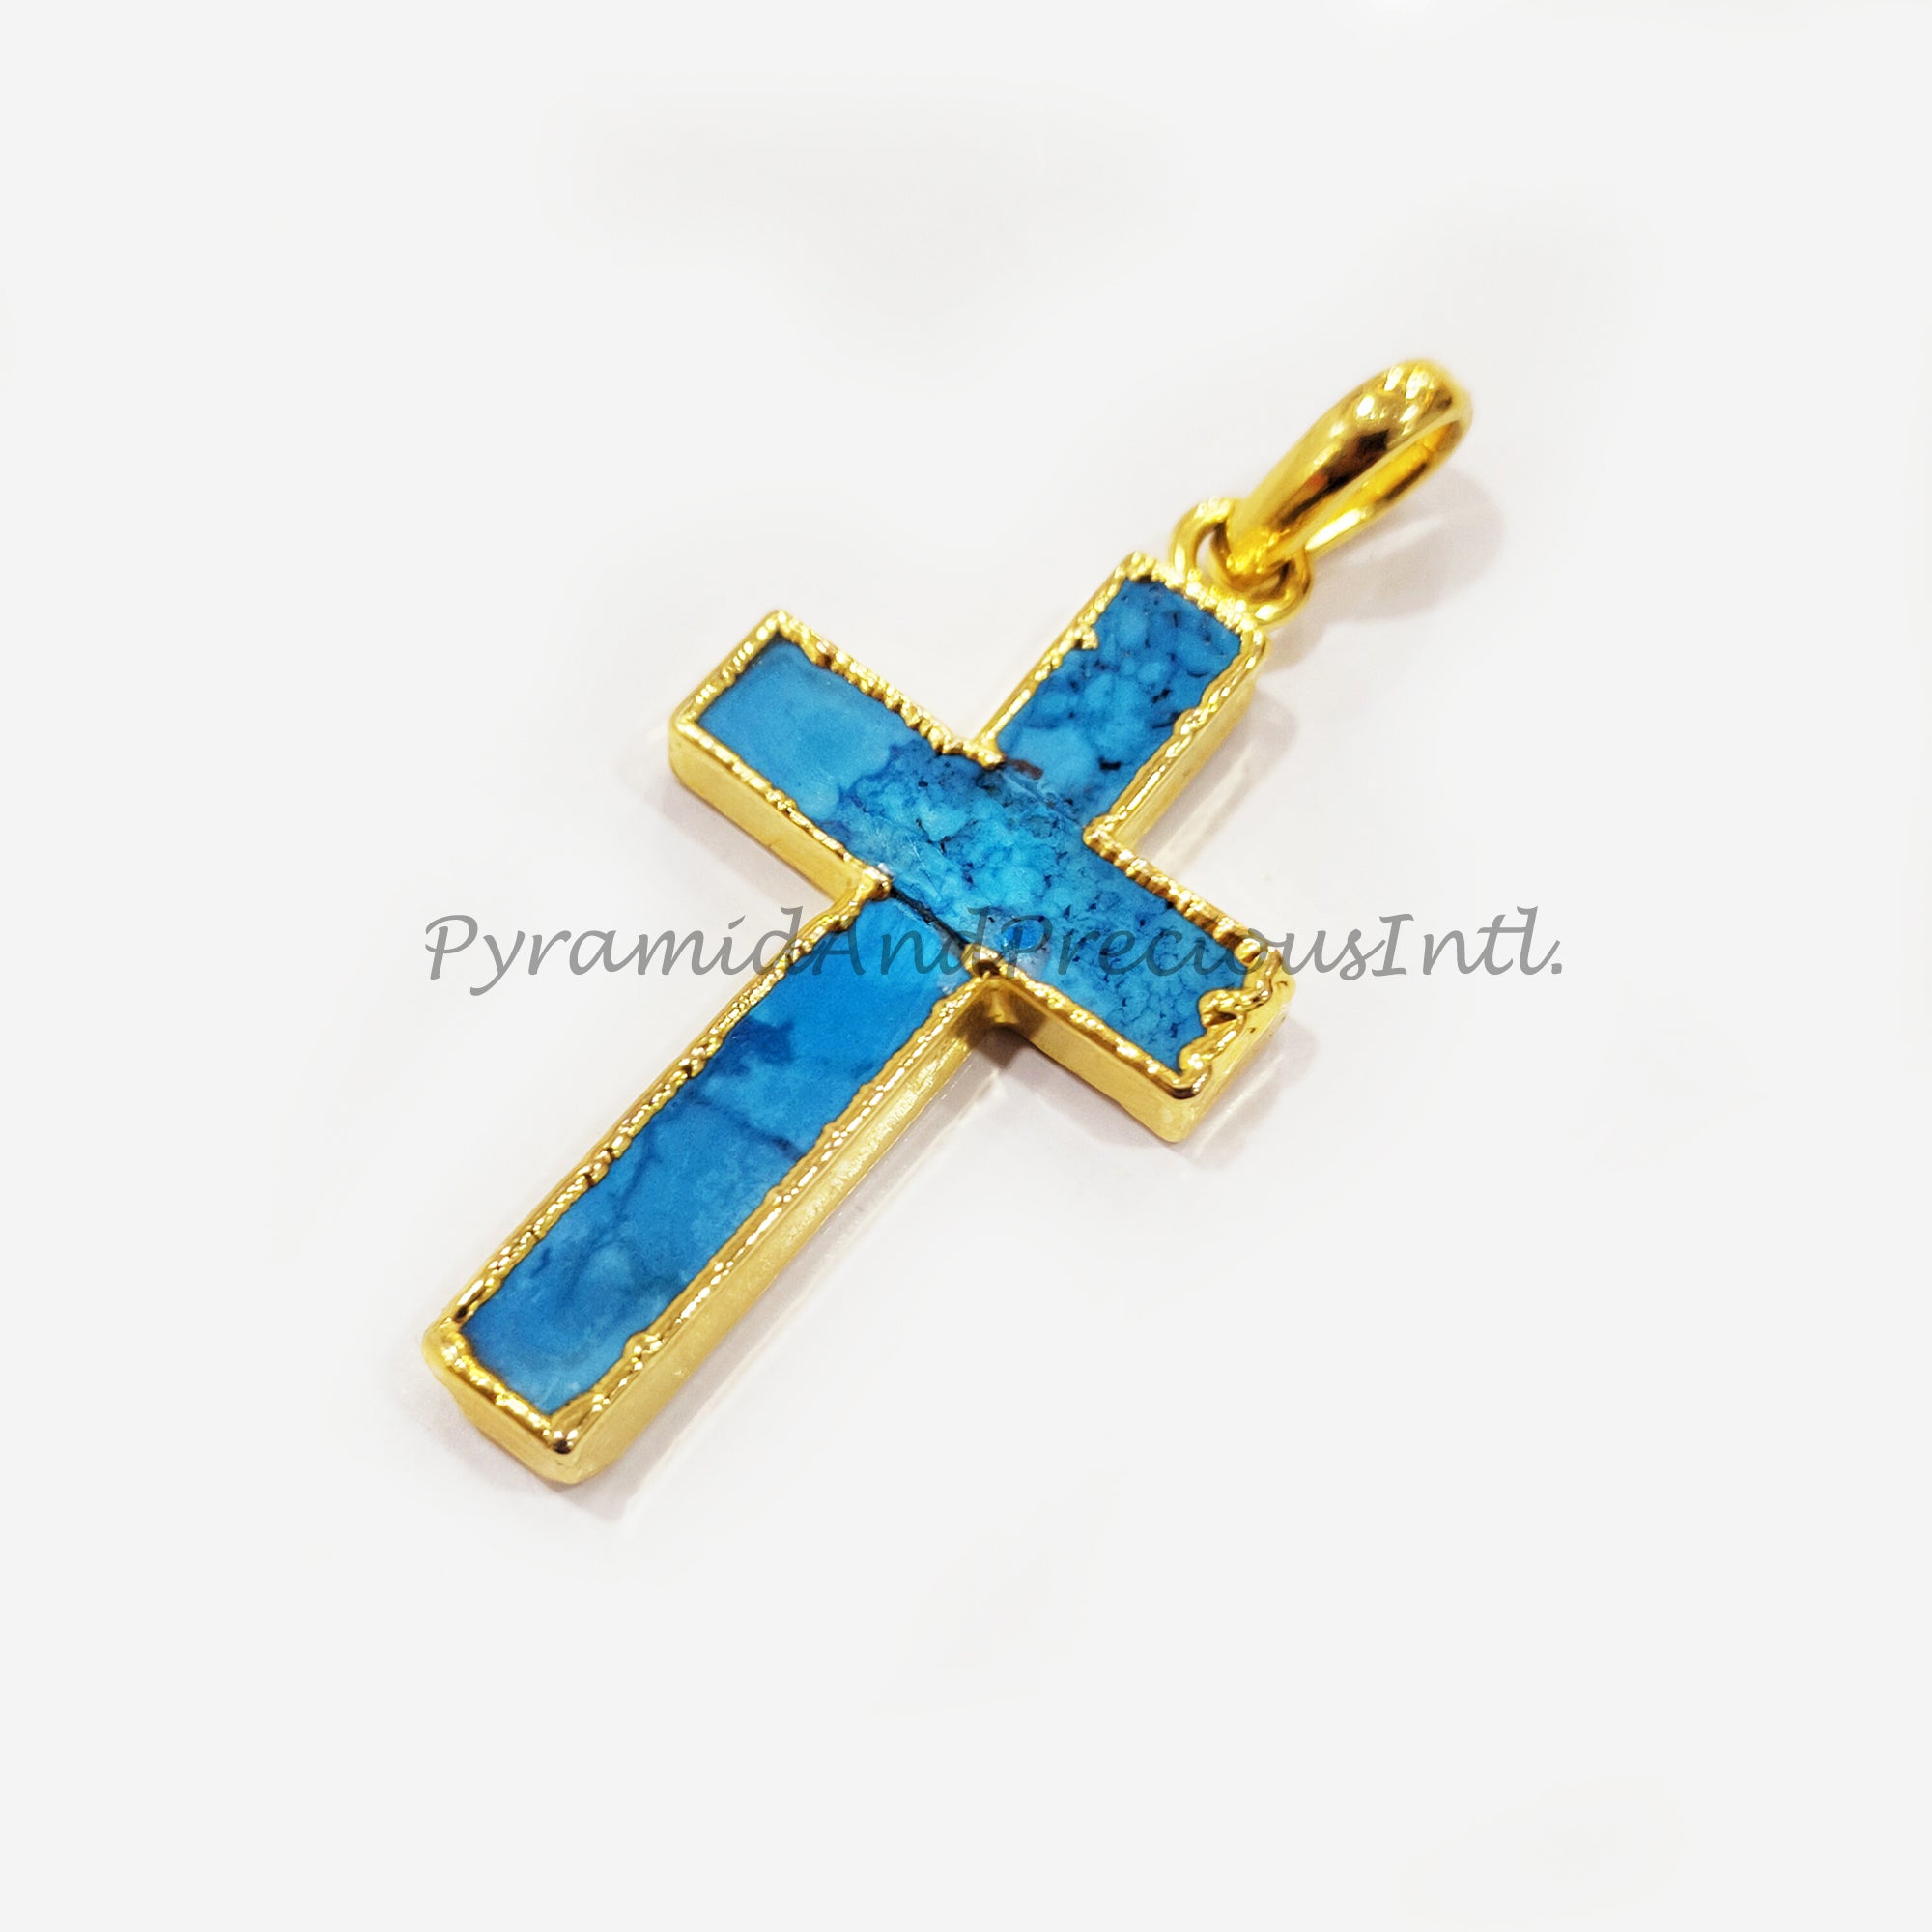 Turquoise Howlite Pendant, Christian Cross Pendant Necklace, December Birthstone